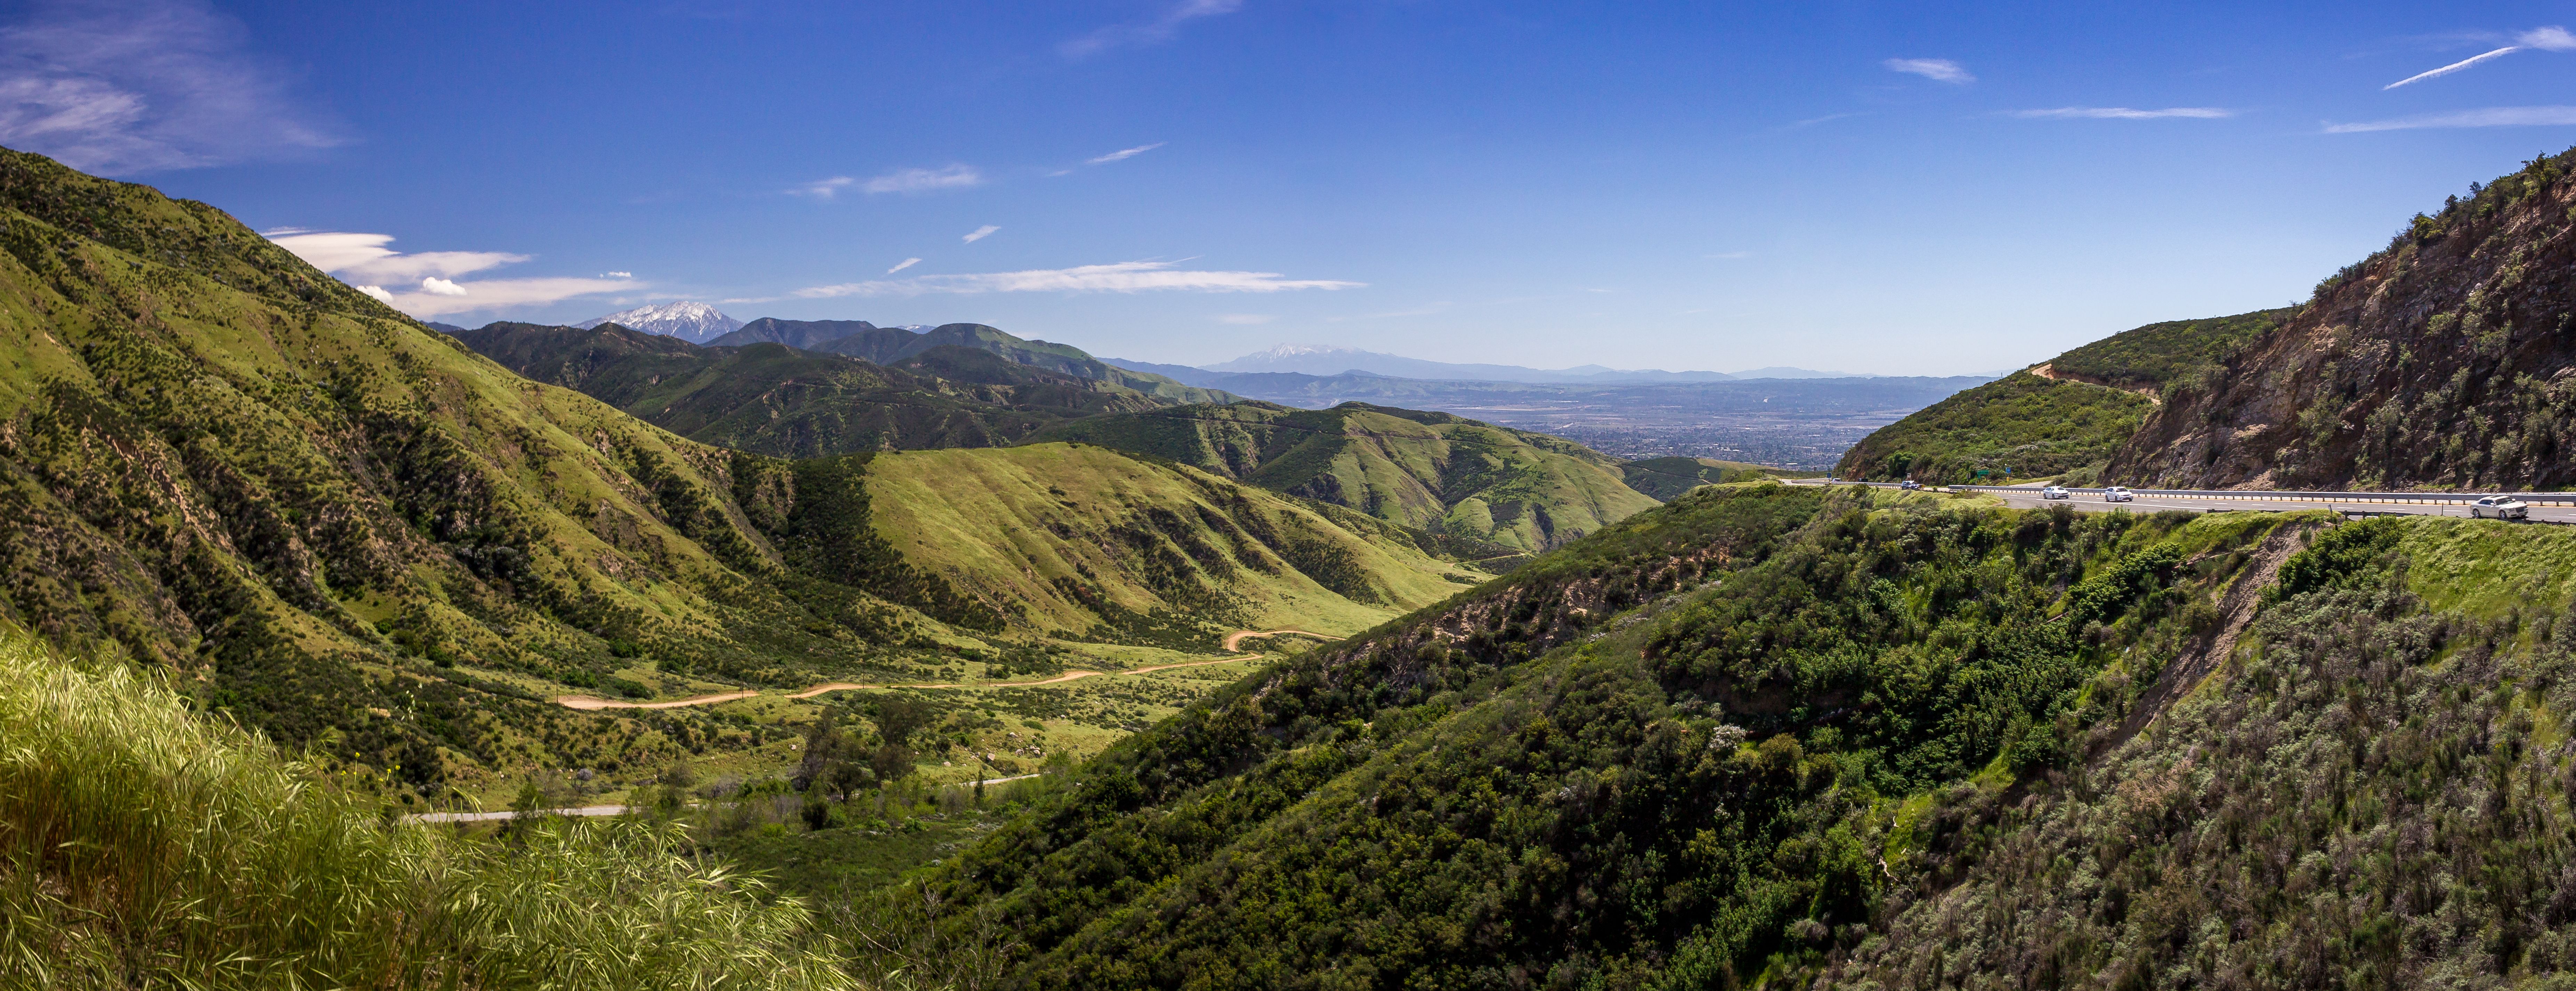 Scenic view of San Bernardino Valley, Rim of the World Scenic Byway, California